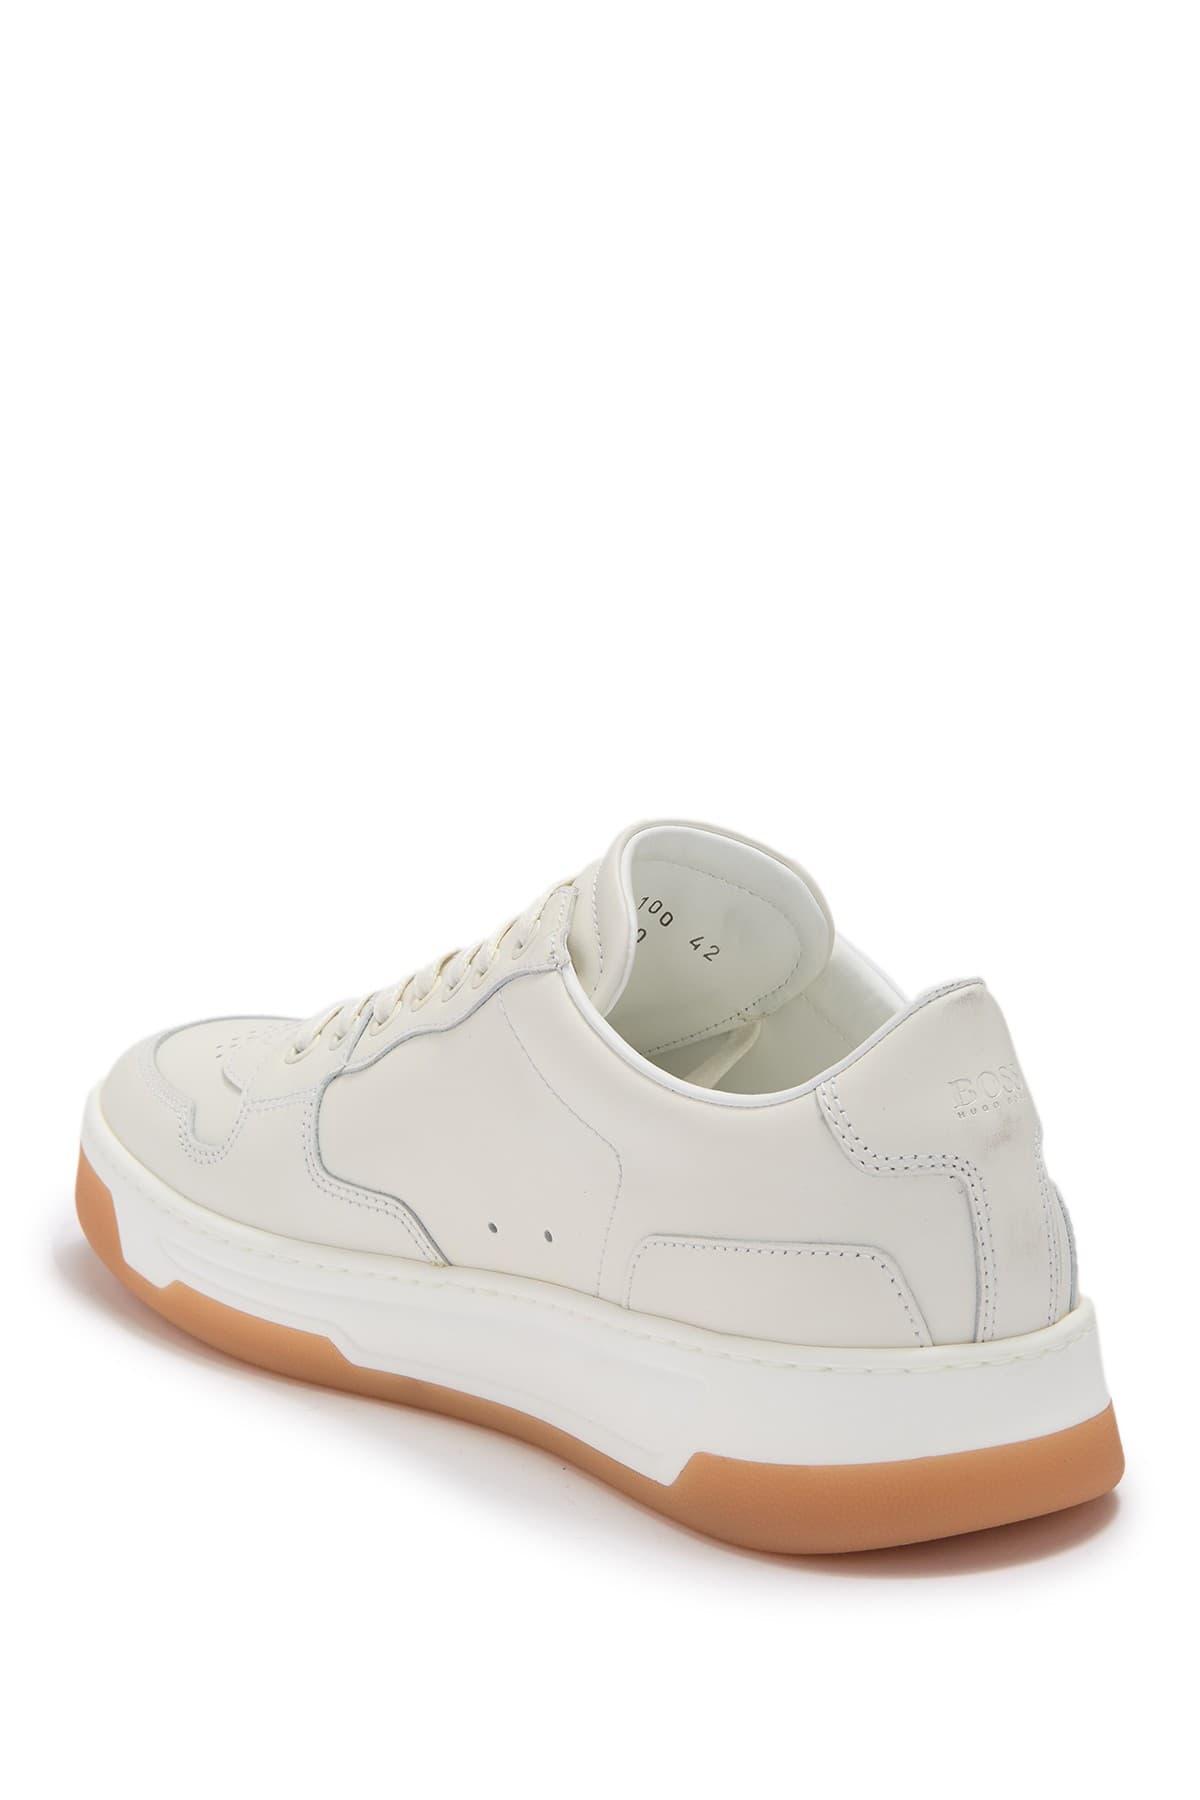 BOSS by HUGO BOSS Leather Baltimore Tennis Sneaker in White for 